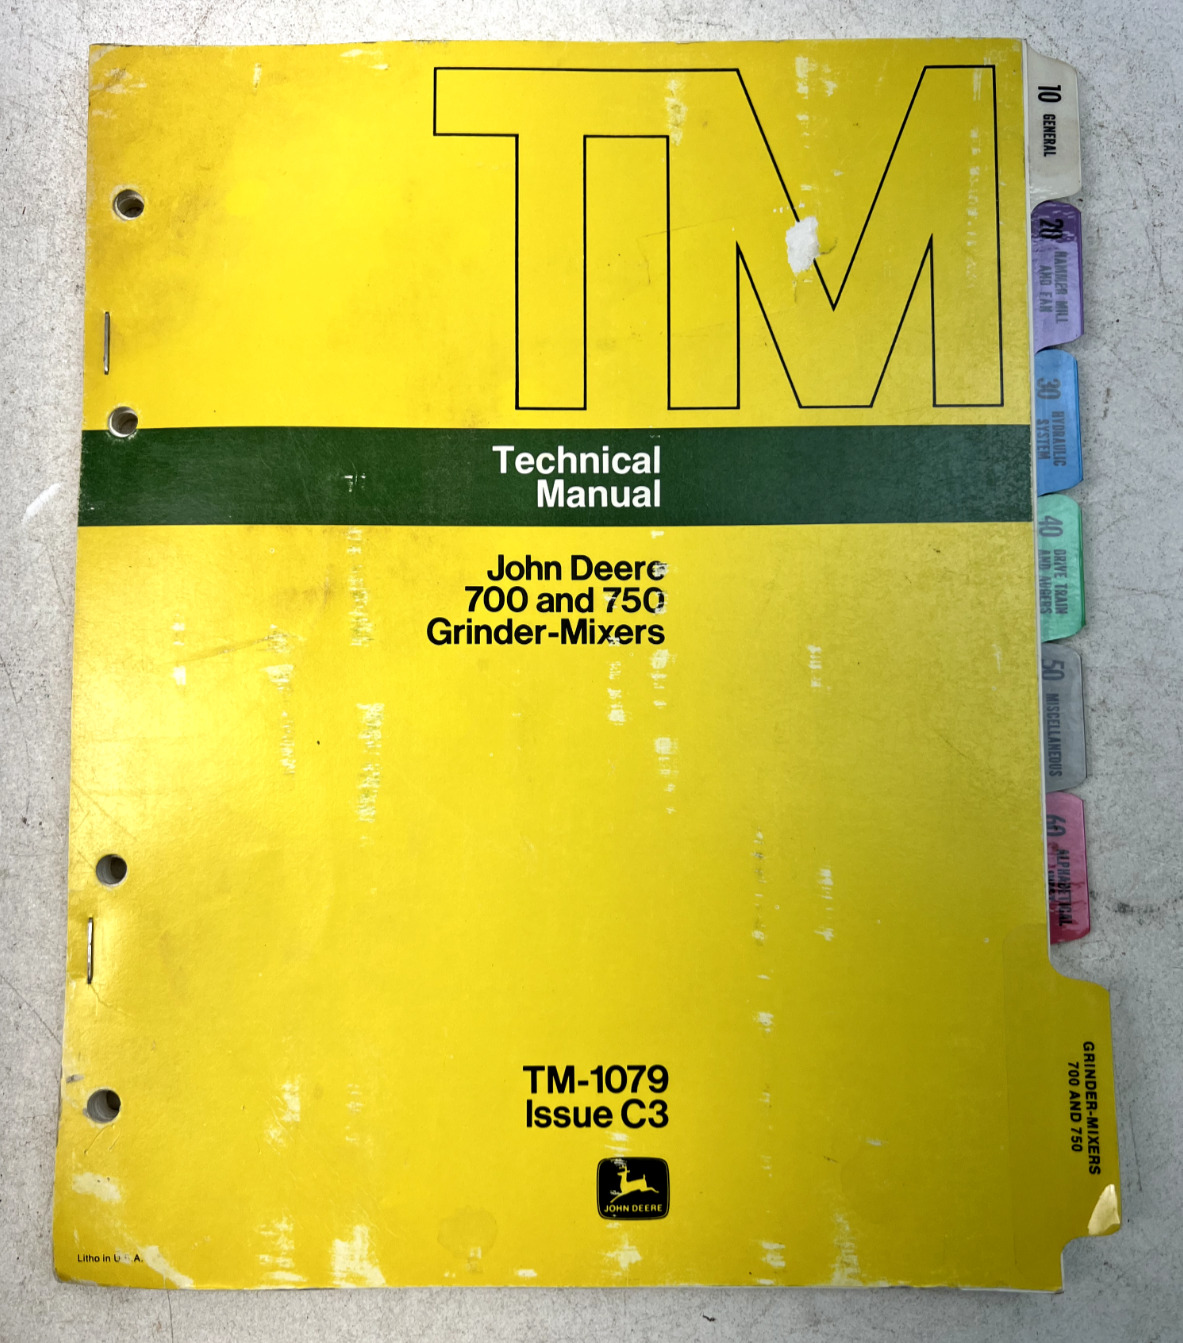 Vintage 1973 John Deere 700 and 750 Grinder-Mixers Technical Manual